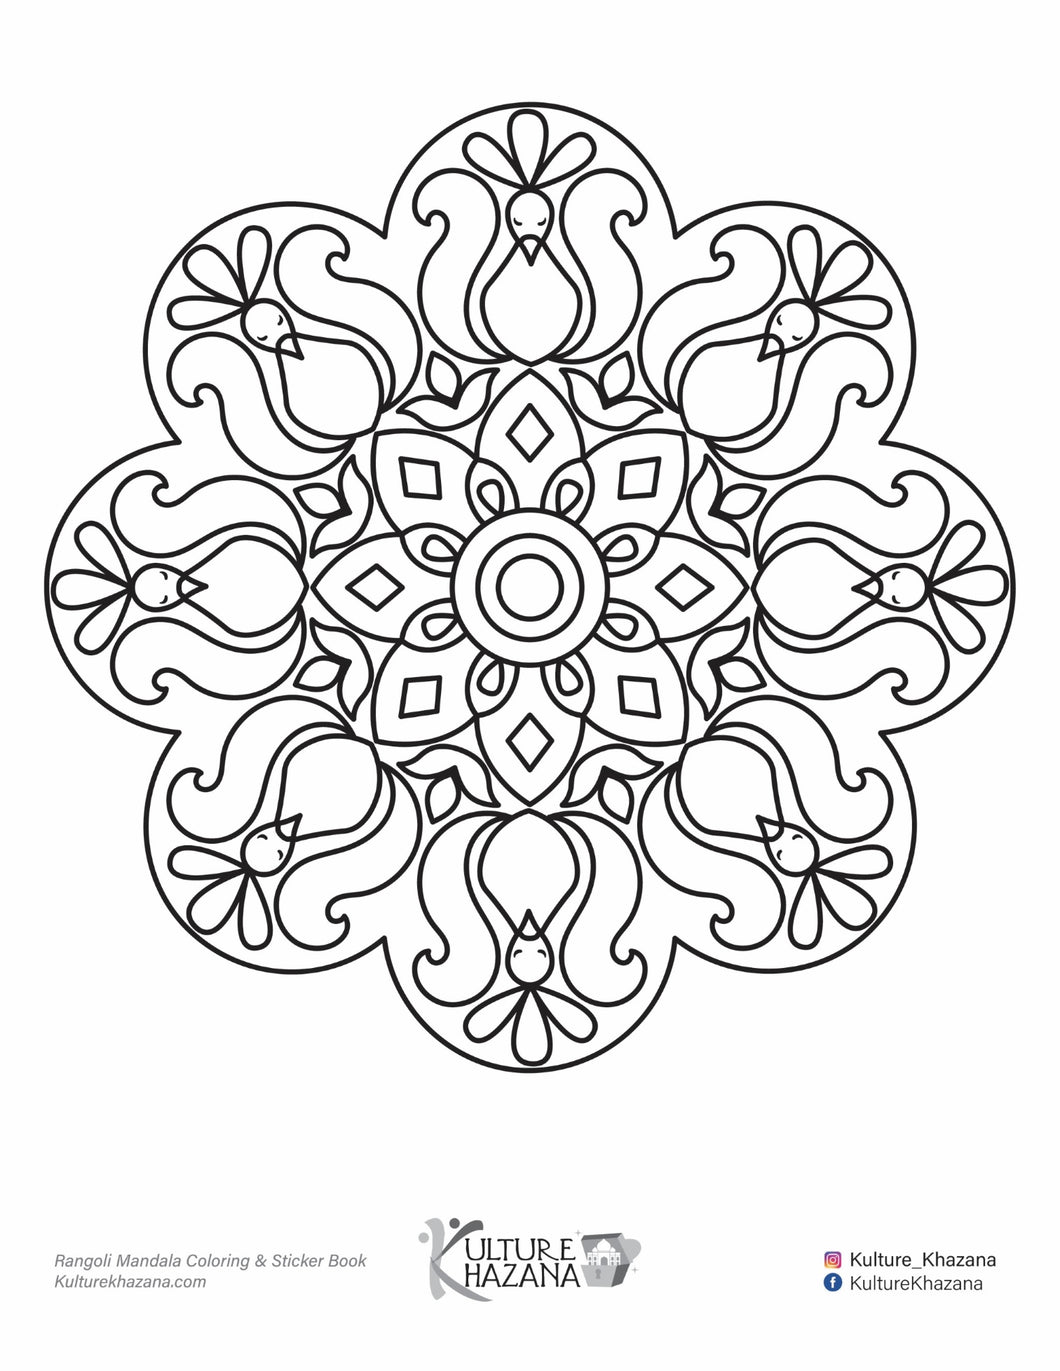 Rangoli Mandala Coloring sheets - Free download